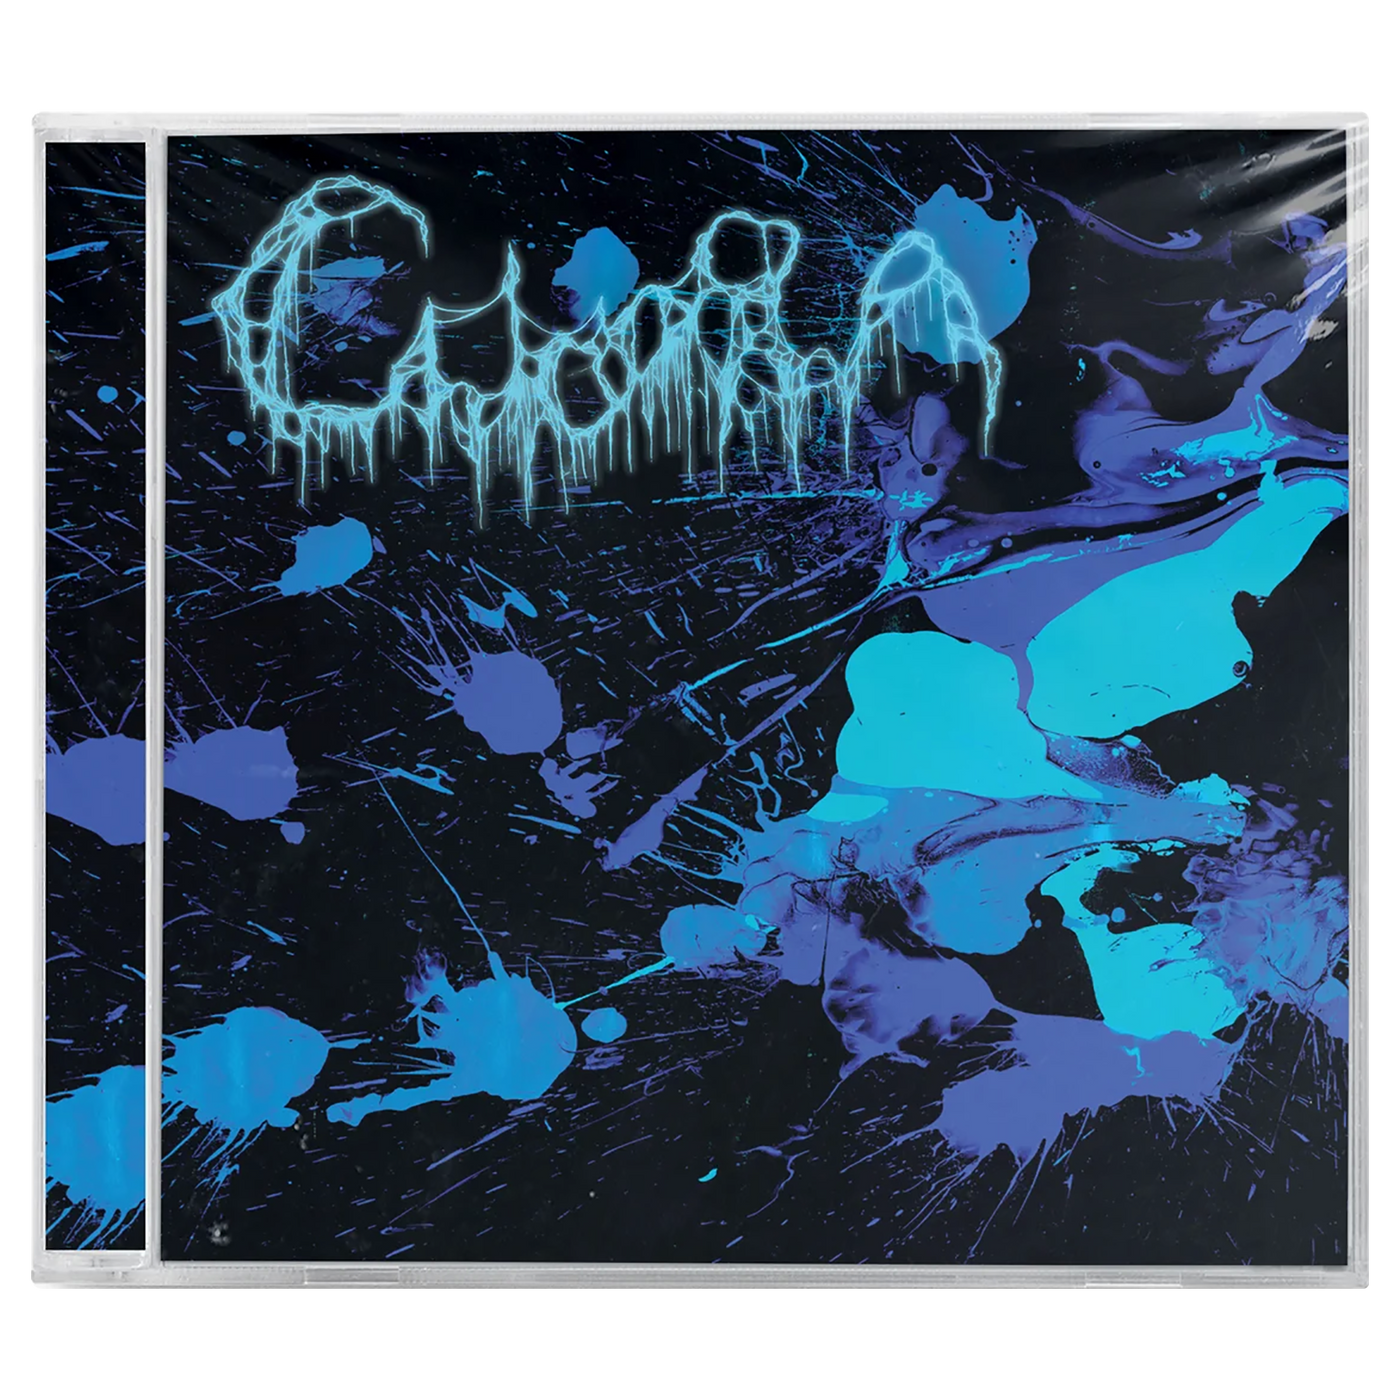 Chloroma 'Chloroma' CD